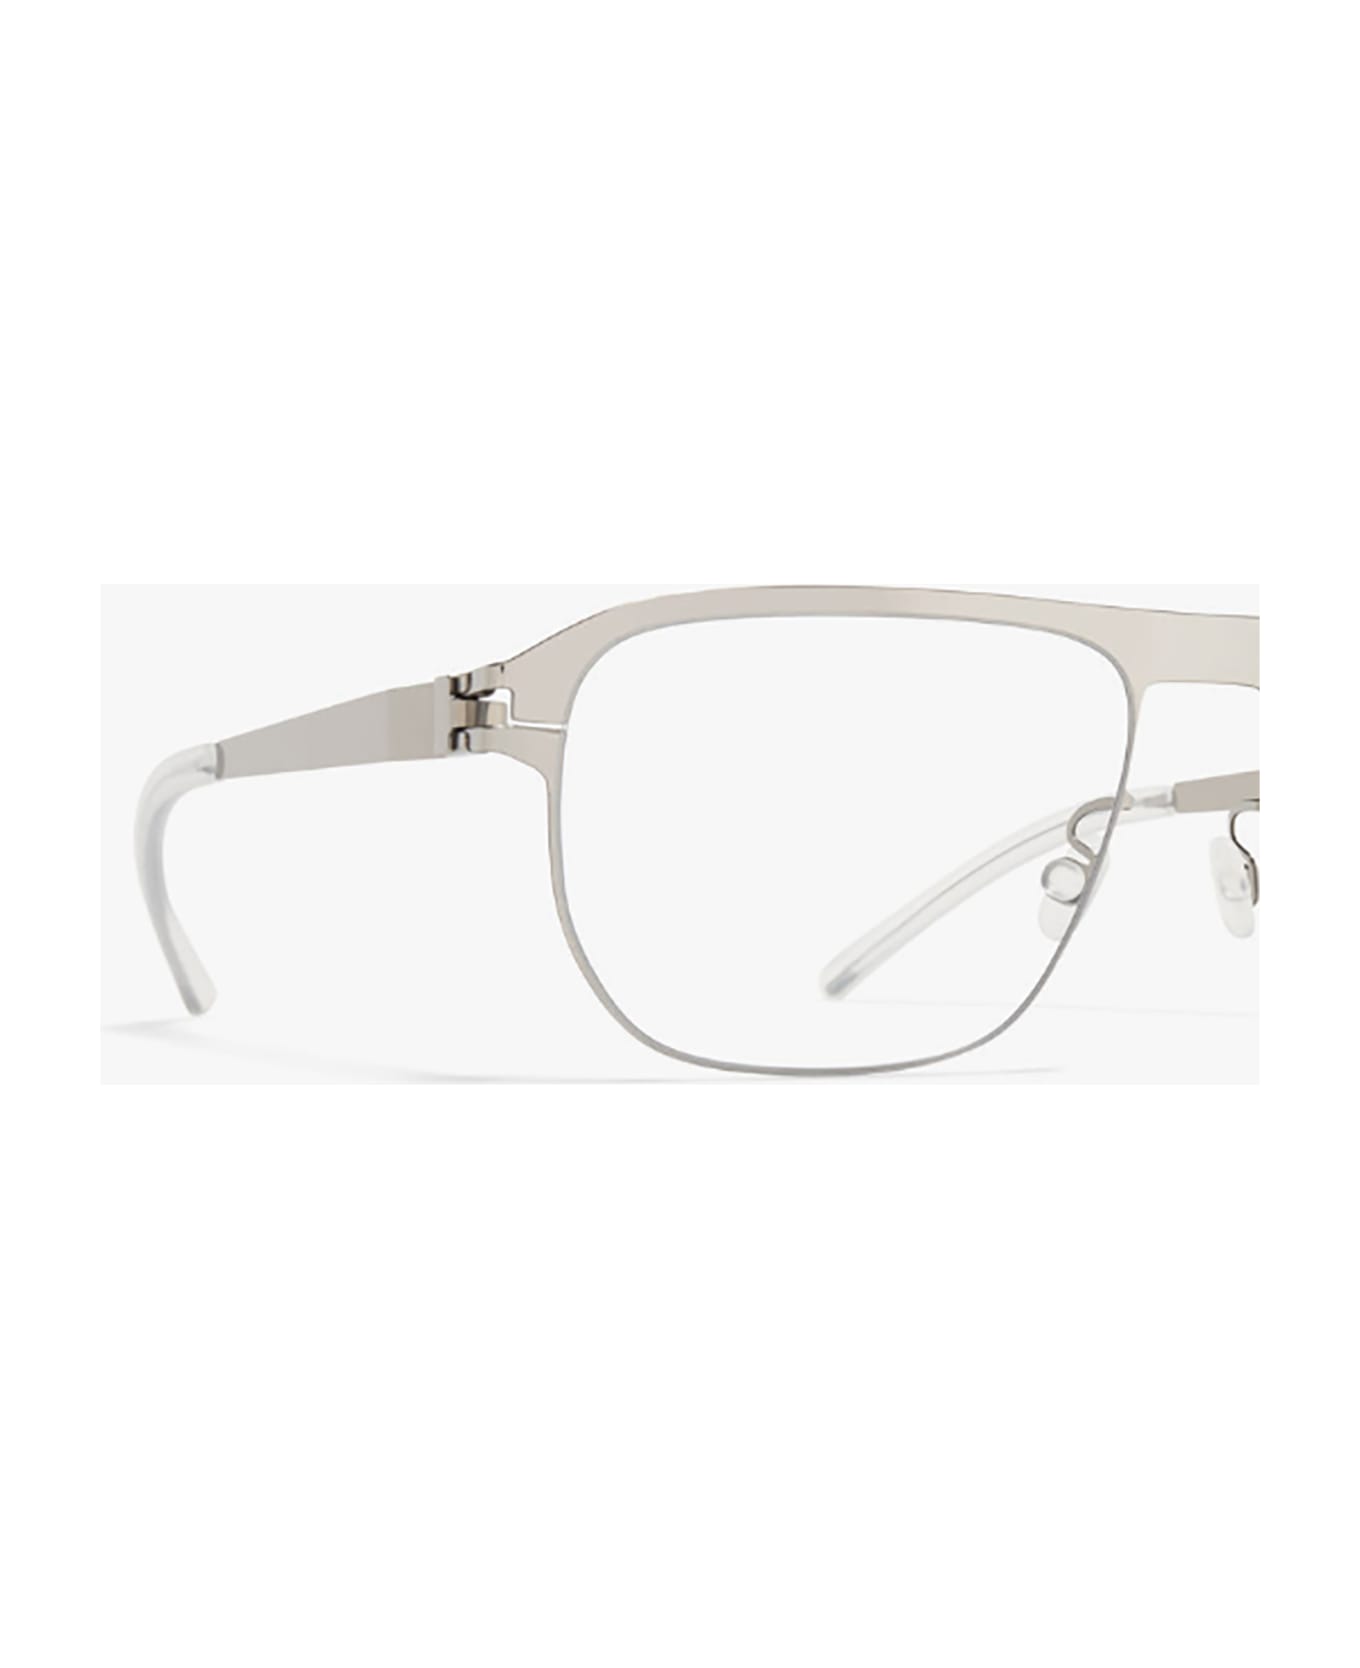 Mykita LORENZO Eyewear - Shiny Silver Clear